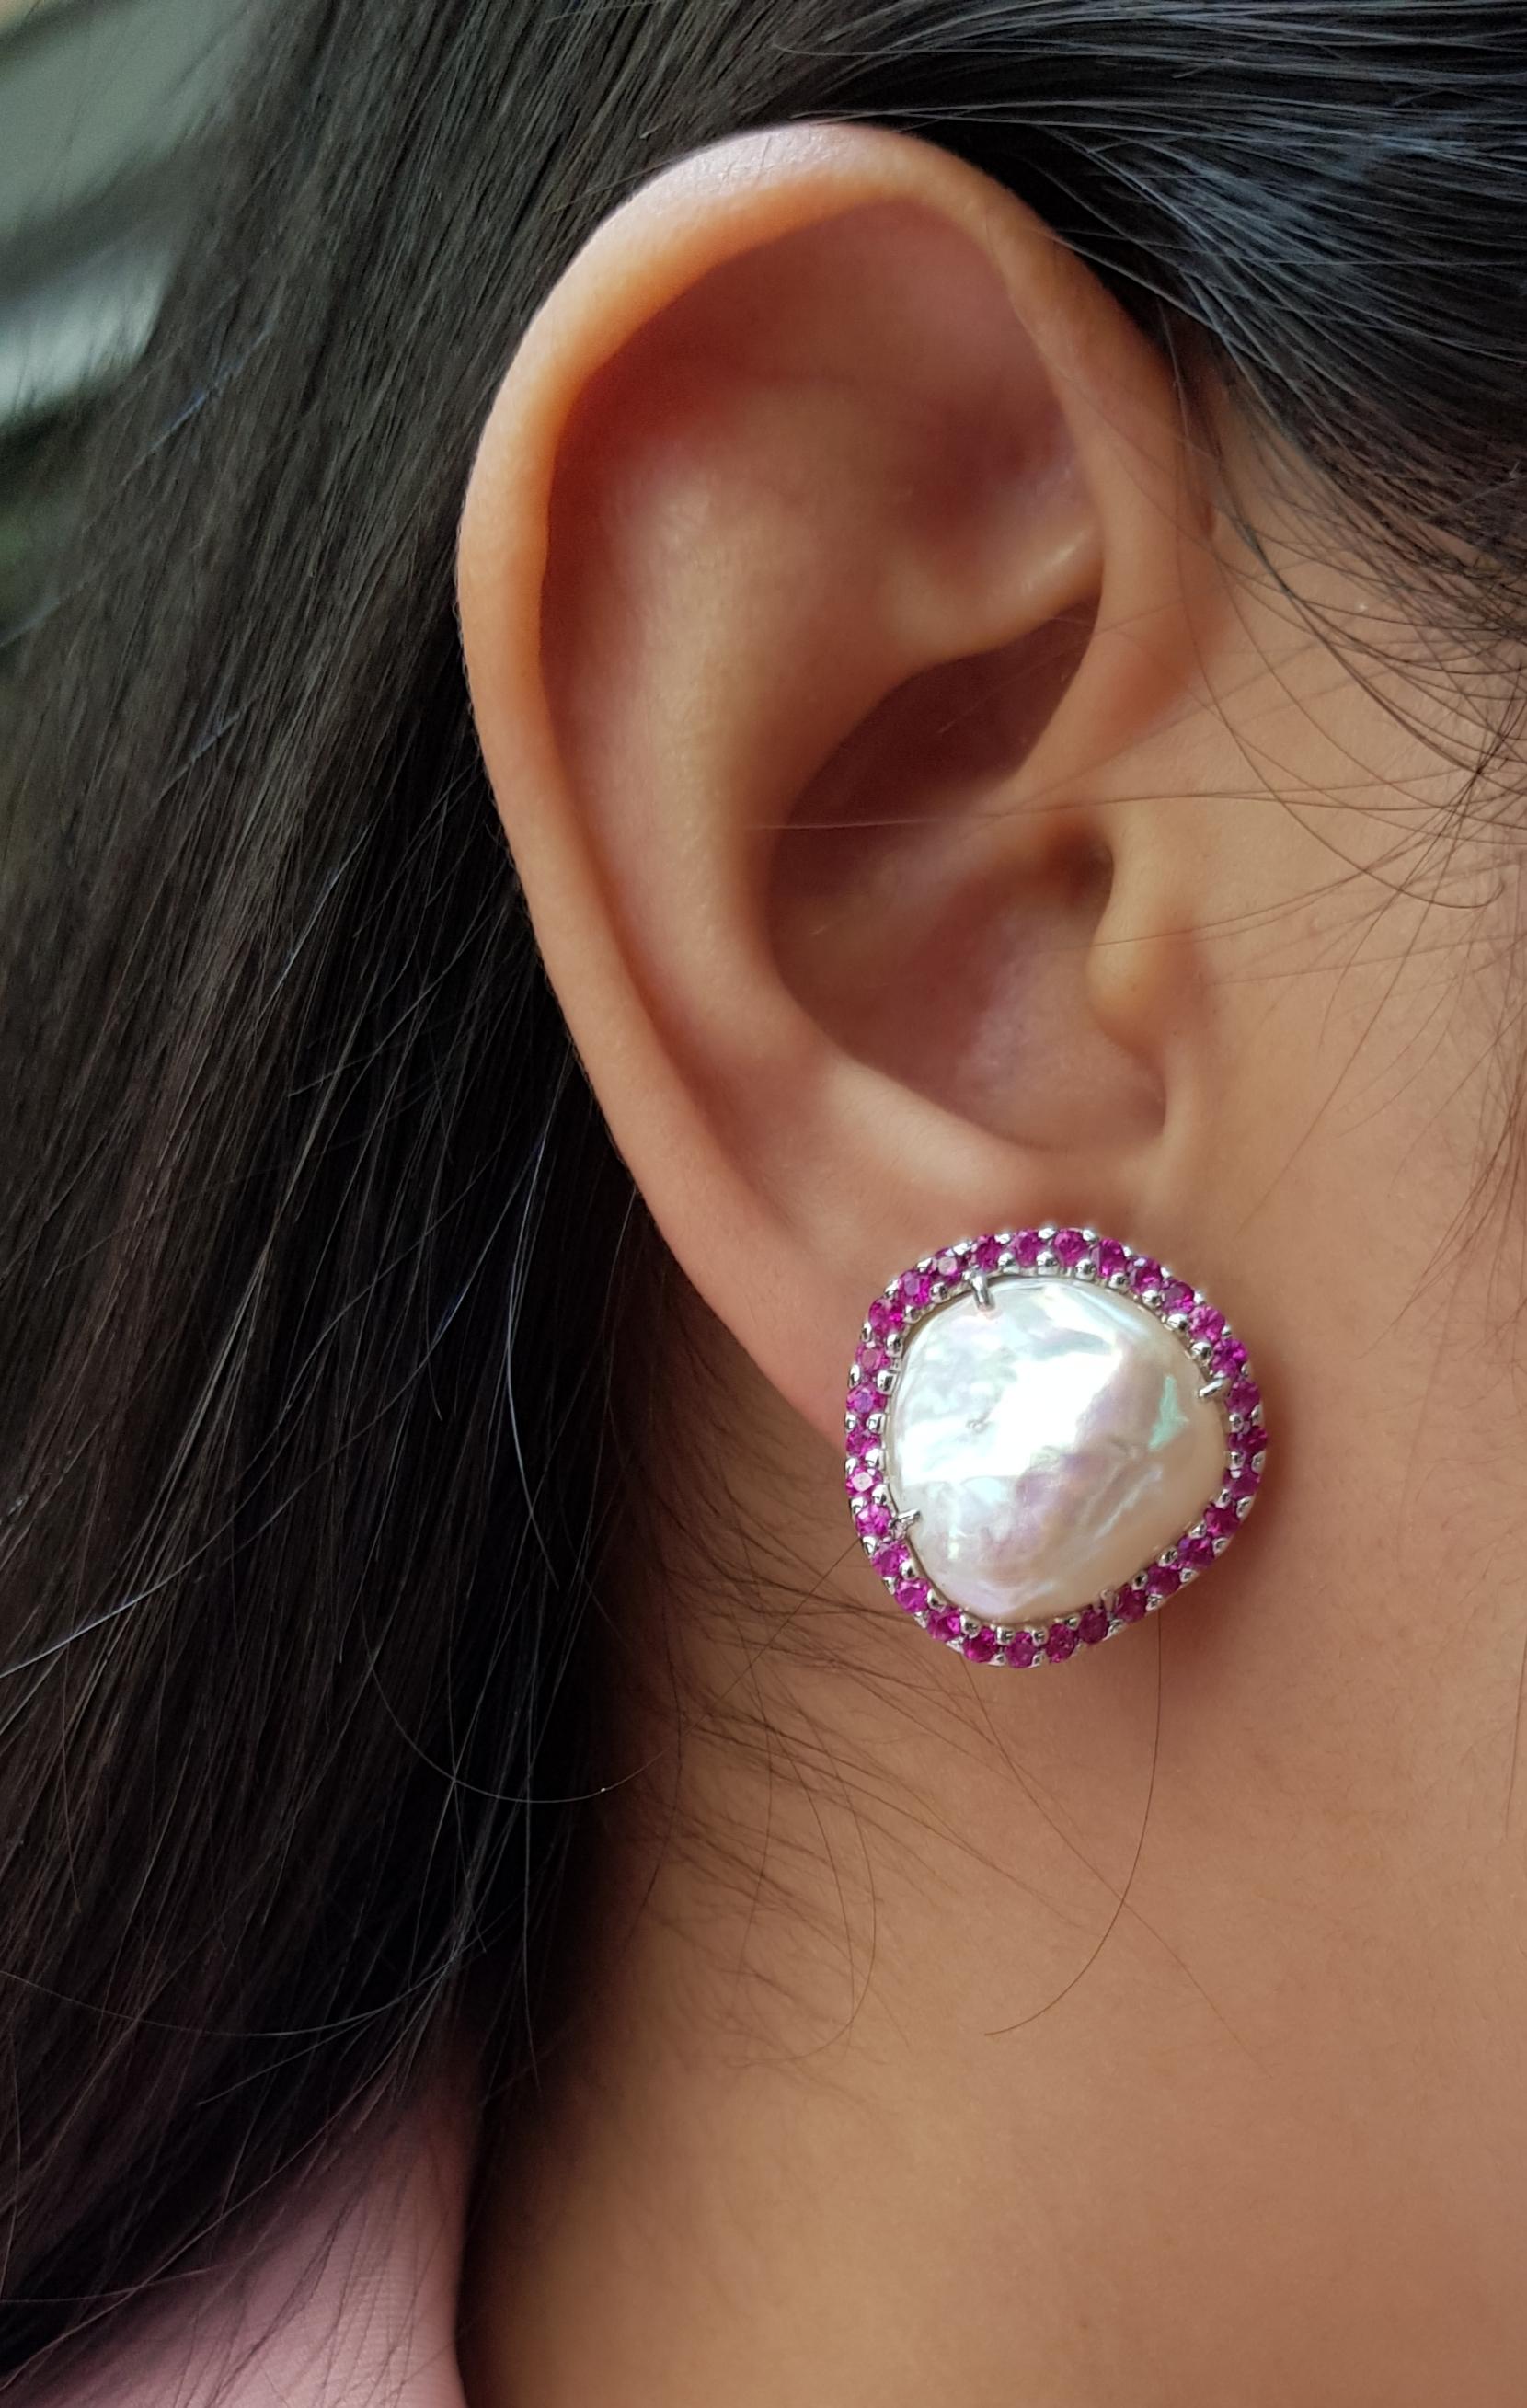 Fresh Water Pearl with Ruby 1.58 carats Earrings set in 18 Karat White Gold Settings

Width: 2.0 cm
Length: 2.0 cm 

